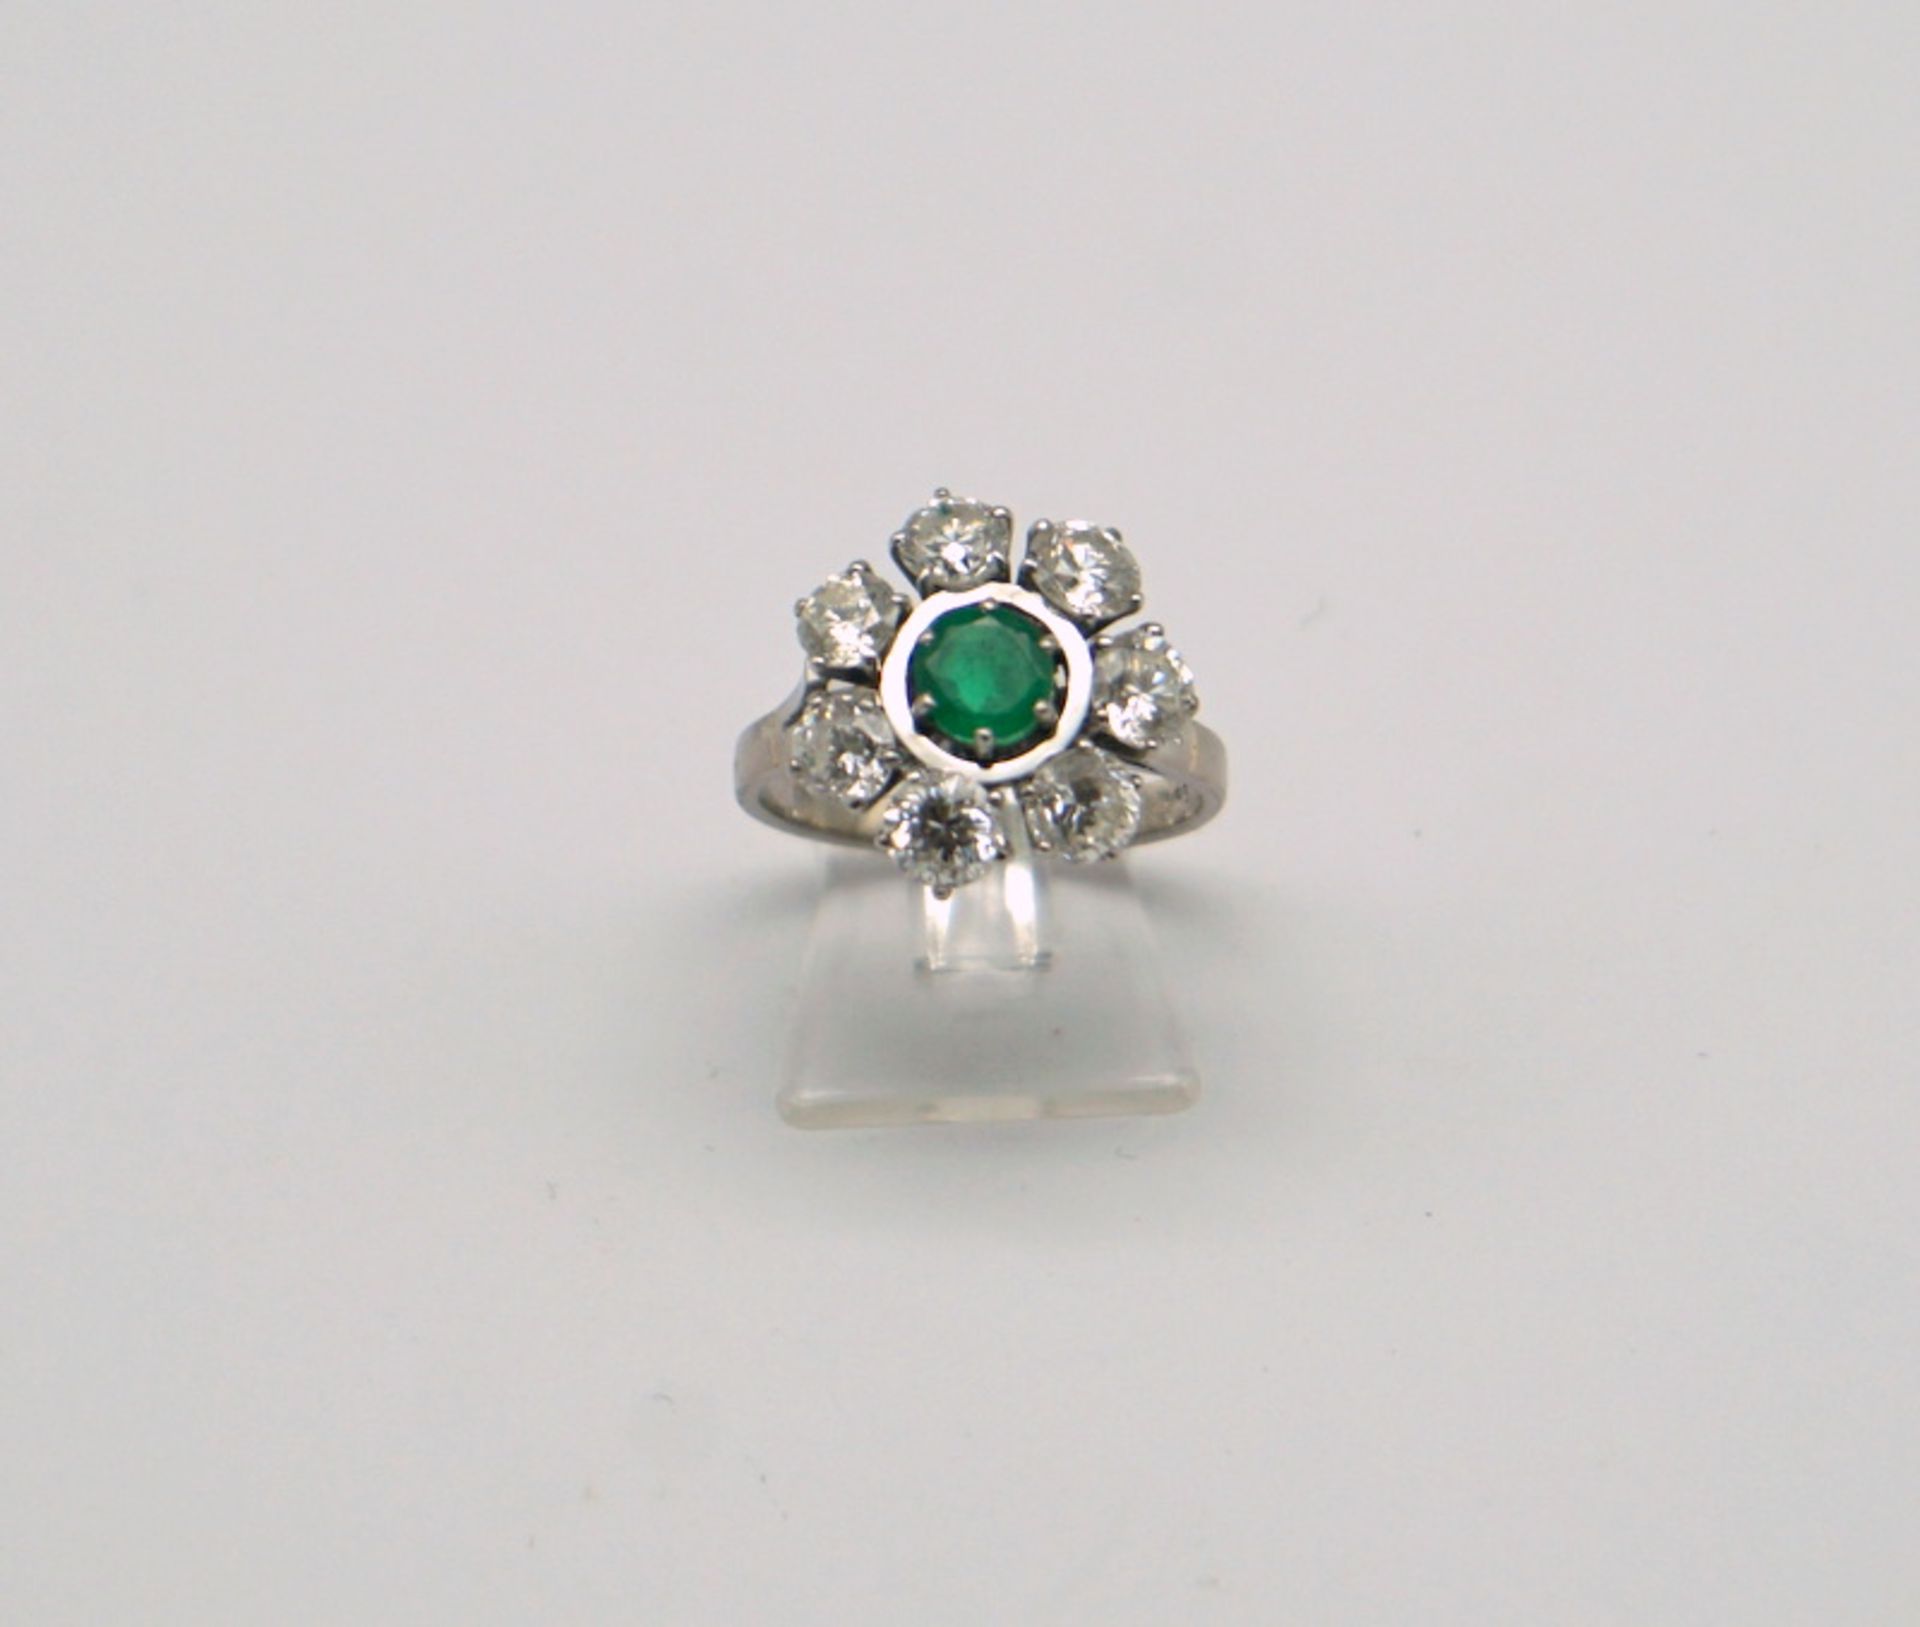 Blumenförmiger Ring mit Smaragd und Brillanten, 585 WG, 2ct Brillanten